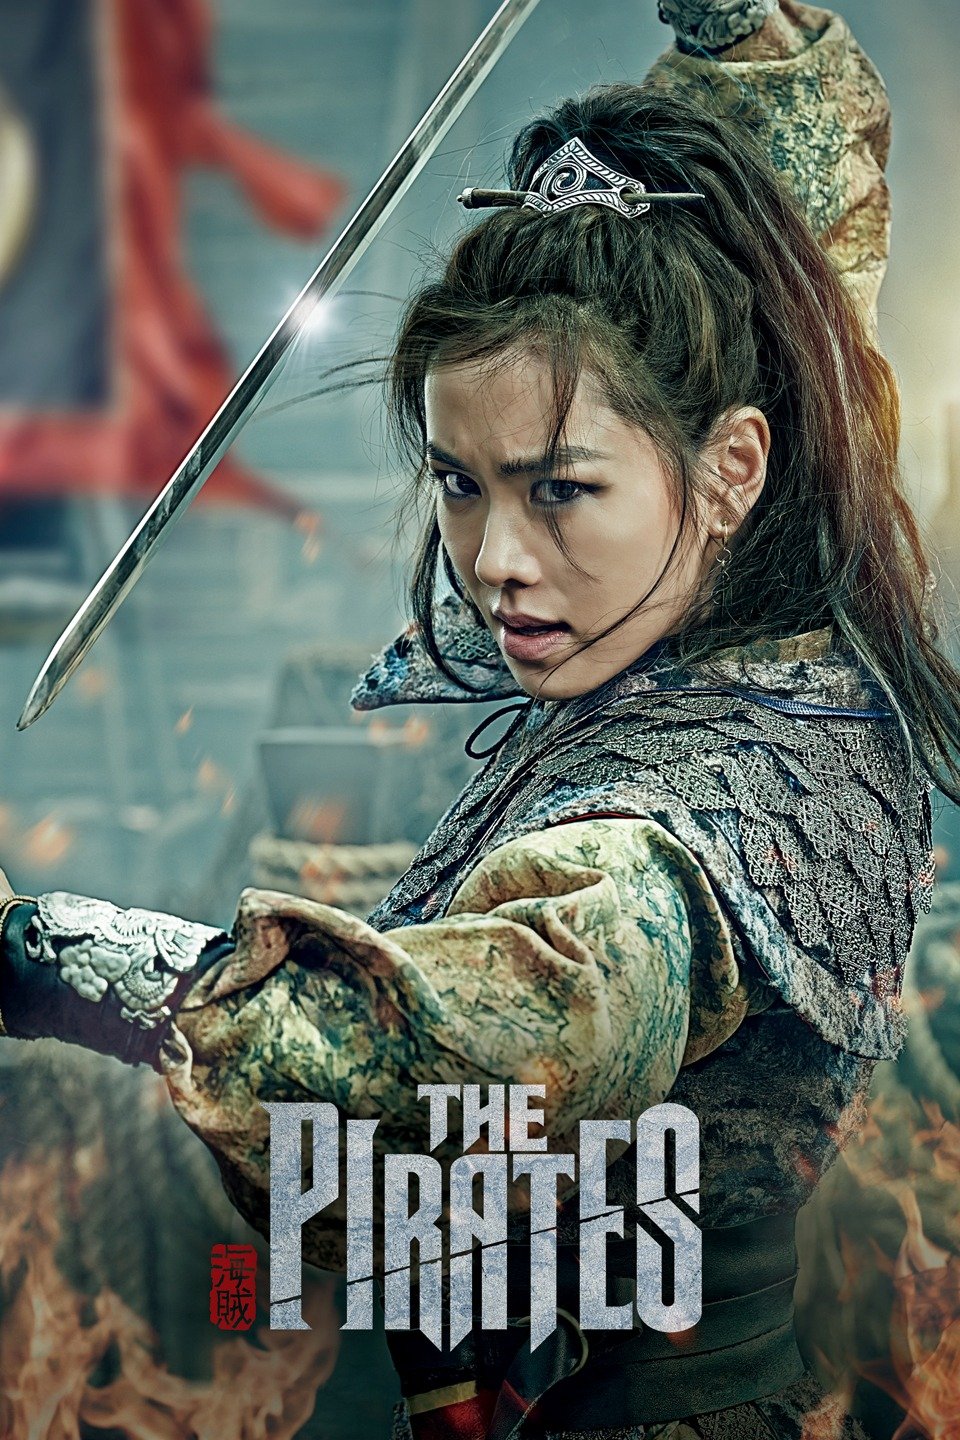 [MINI Super-HQ] The Pirates (2014) ศึกโจรสลัด ล่าสุดขอบโลก [1080p] [พากย์ไทย 5.1 + เสียงเกาหลี DTS] [บรรยายไทย + อังกฤษ] [เสียงไทย + ซับไทย] [ONE2UP]